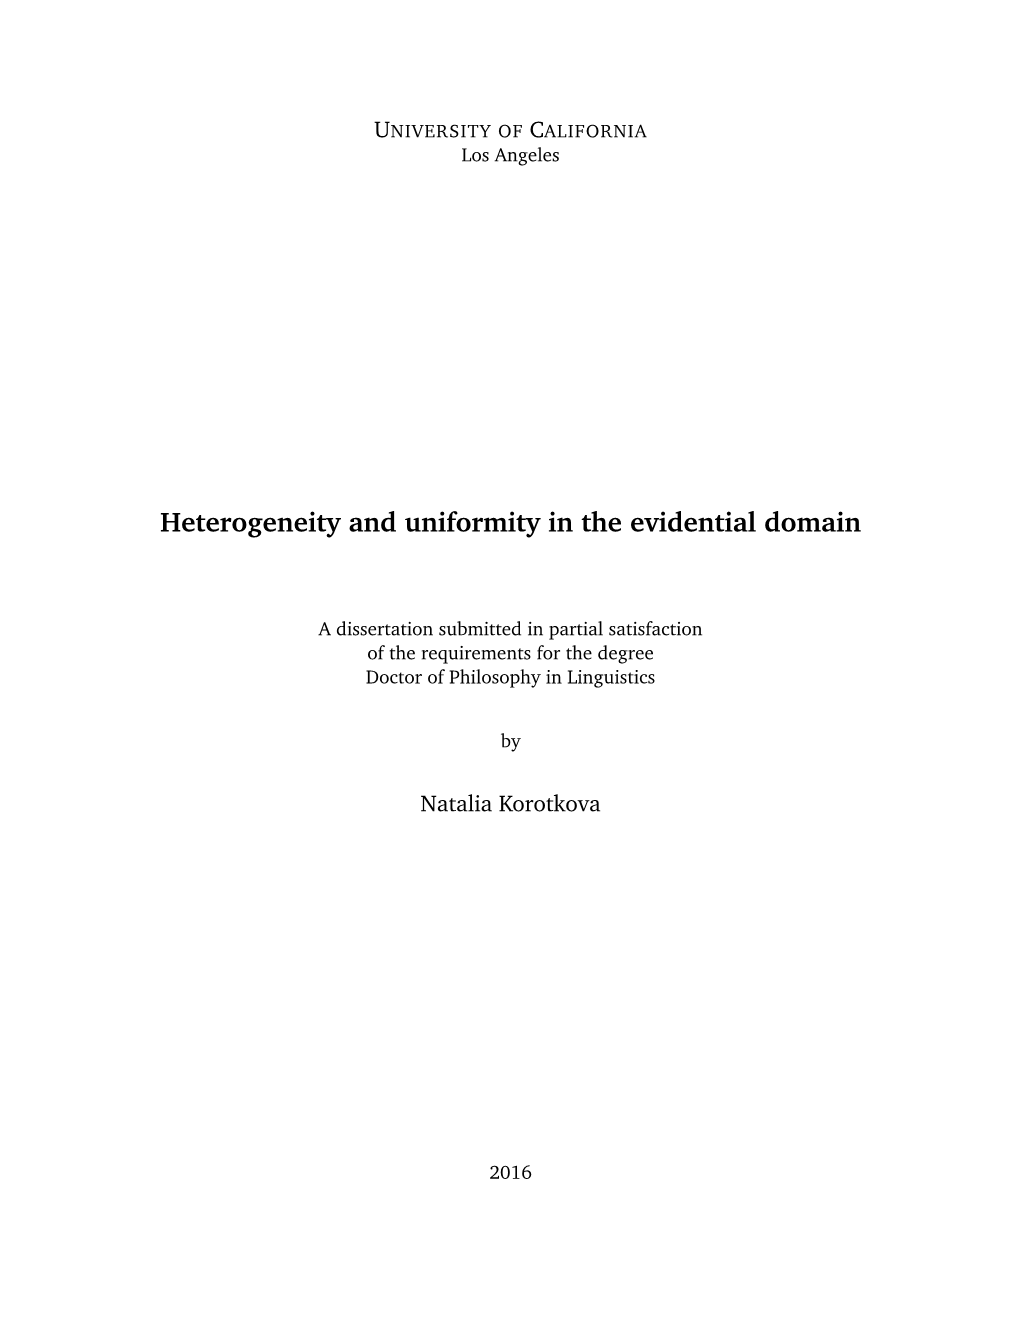 Heterogeneity and Uniformity in the Evidential Domain